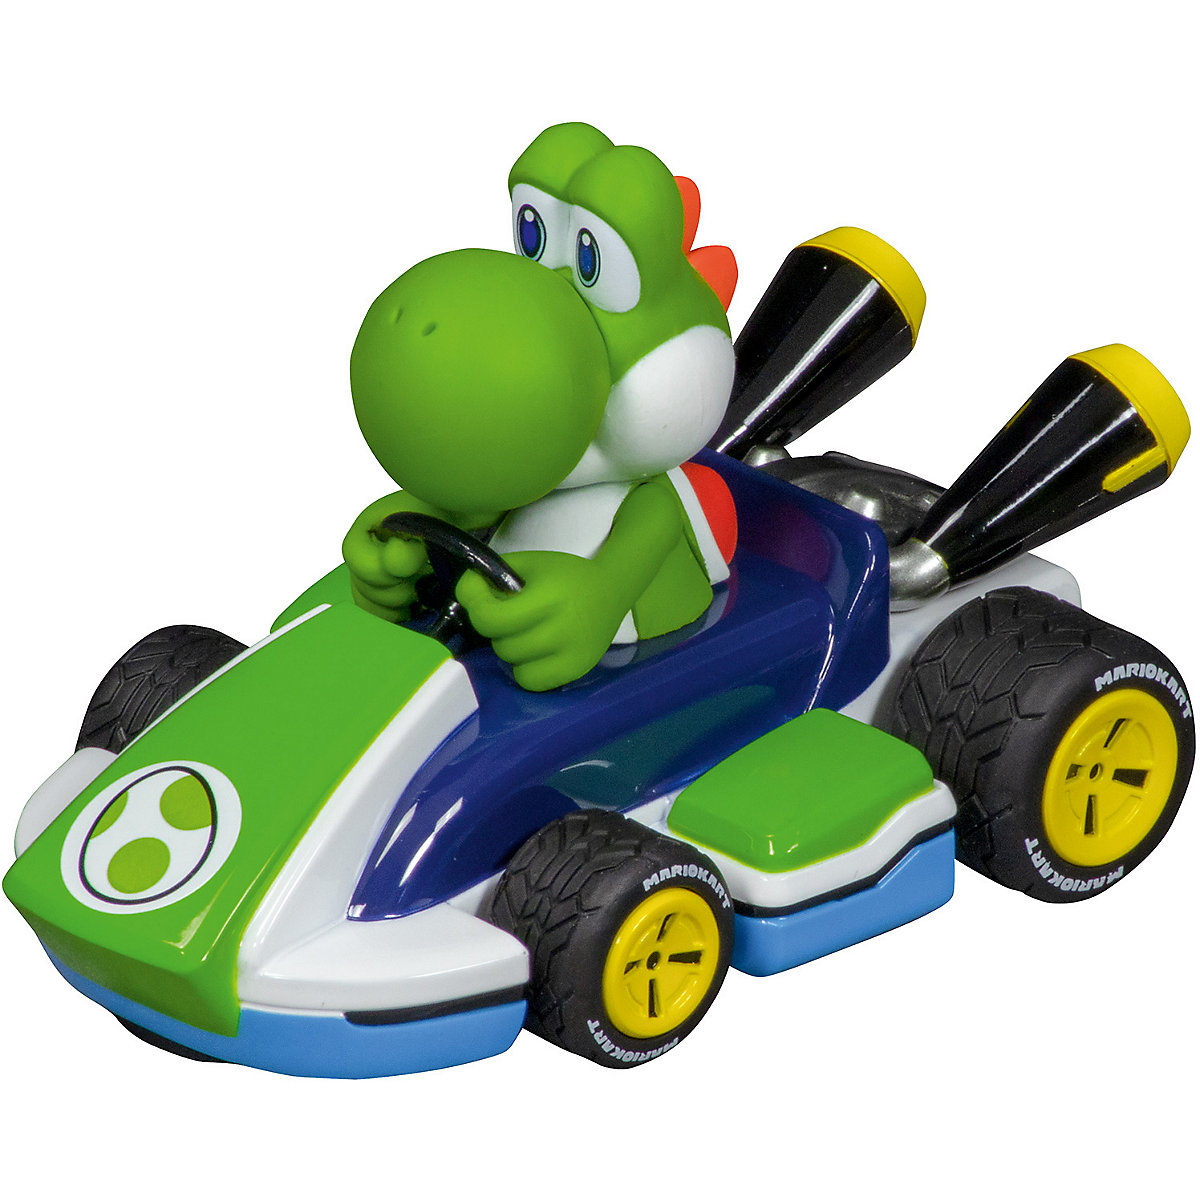 CARRERA EVOLUTION 1:32 Slot Car Mario Kart - Yoshi